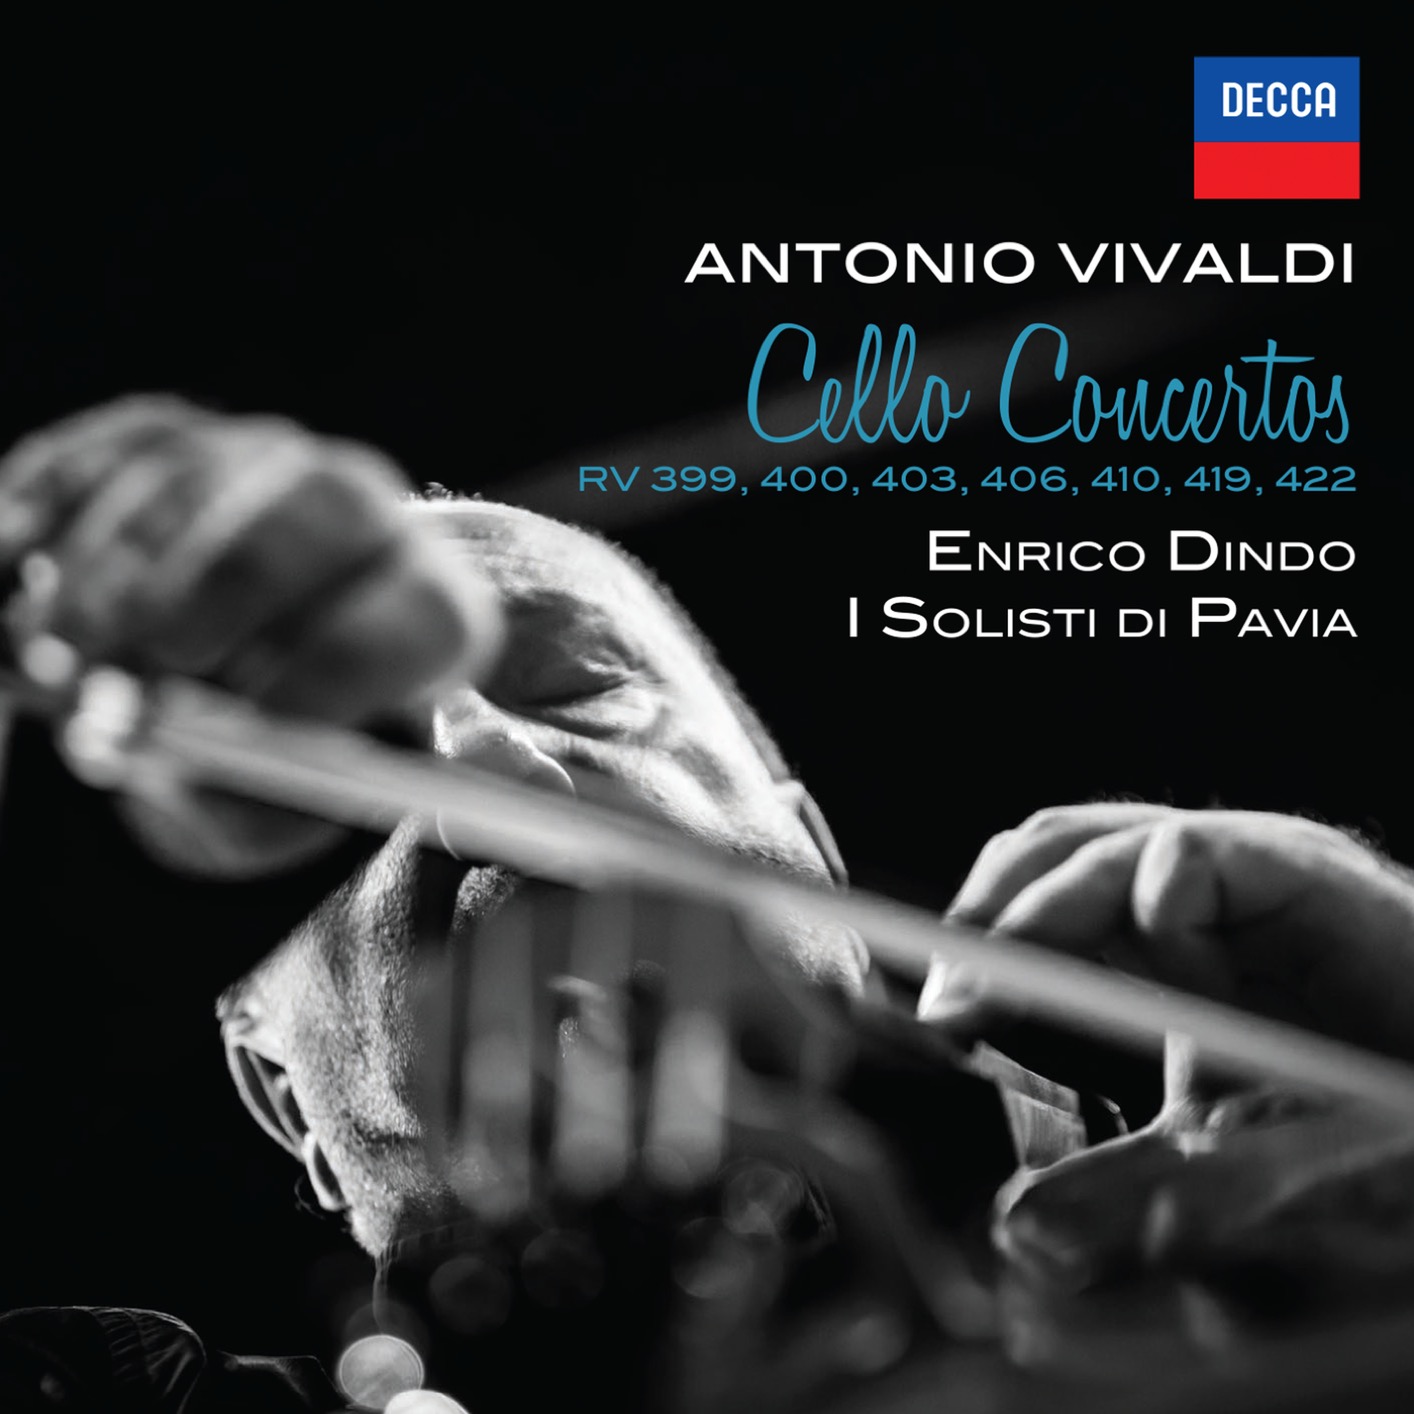 Enrico Dindo, I Solisti di Pavia - Vivaldi: Cello Concertos RV 399, 400, 403, 406, 410, 419, 422 (2016) [HighResAudio FLAC 24bit/96kHz]